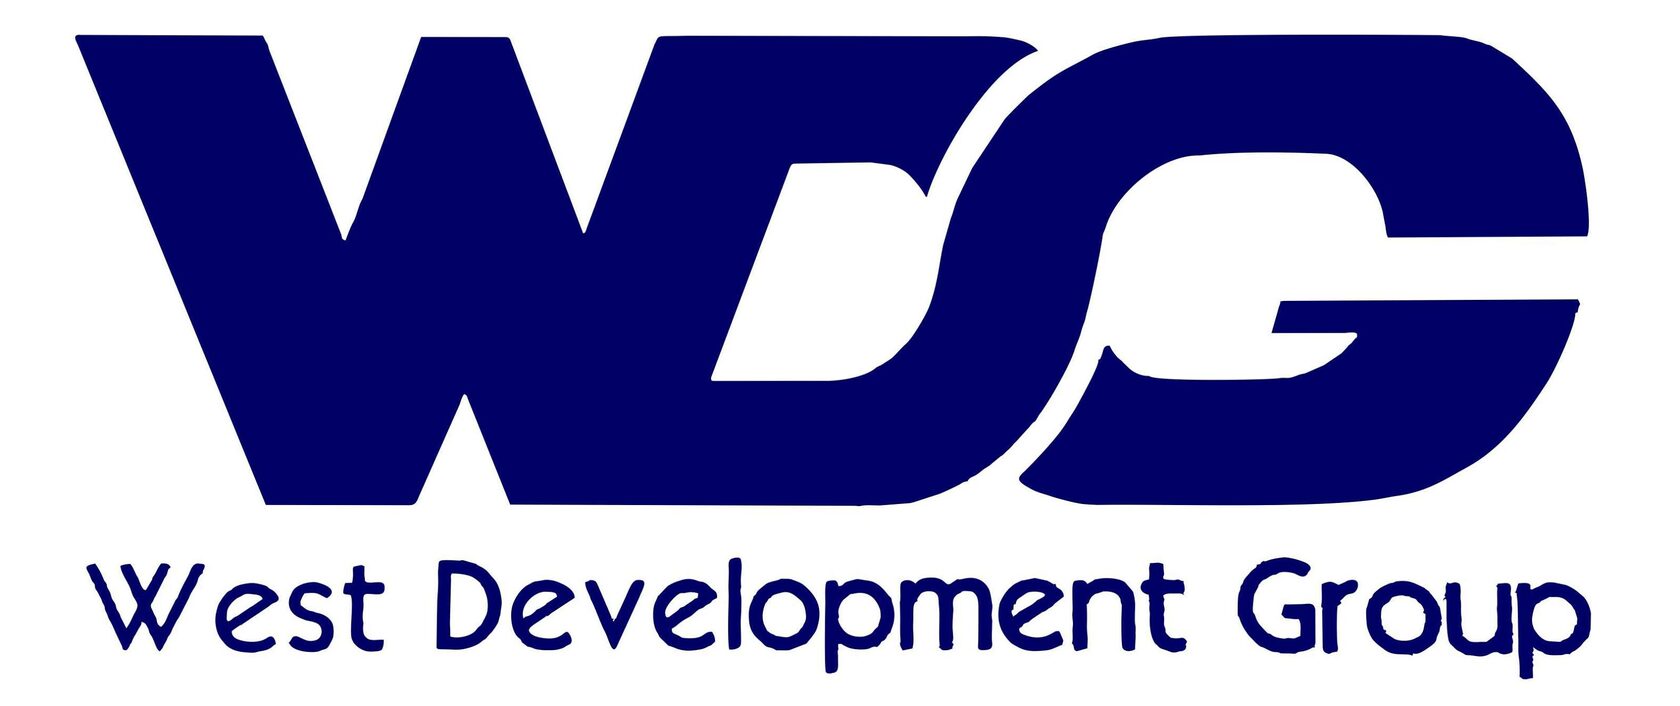 West Development Group